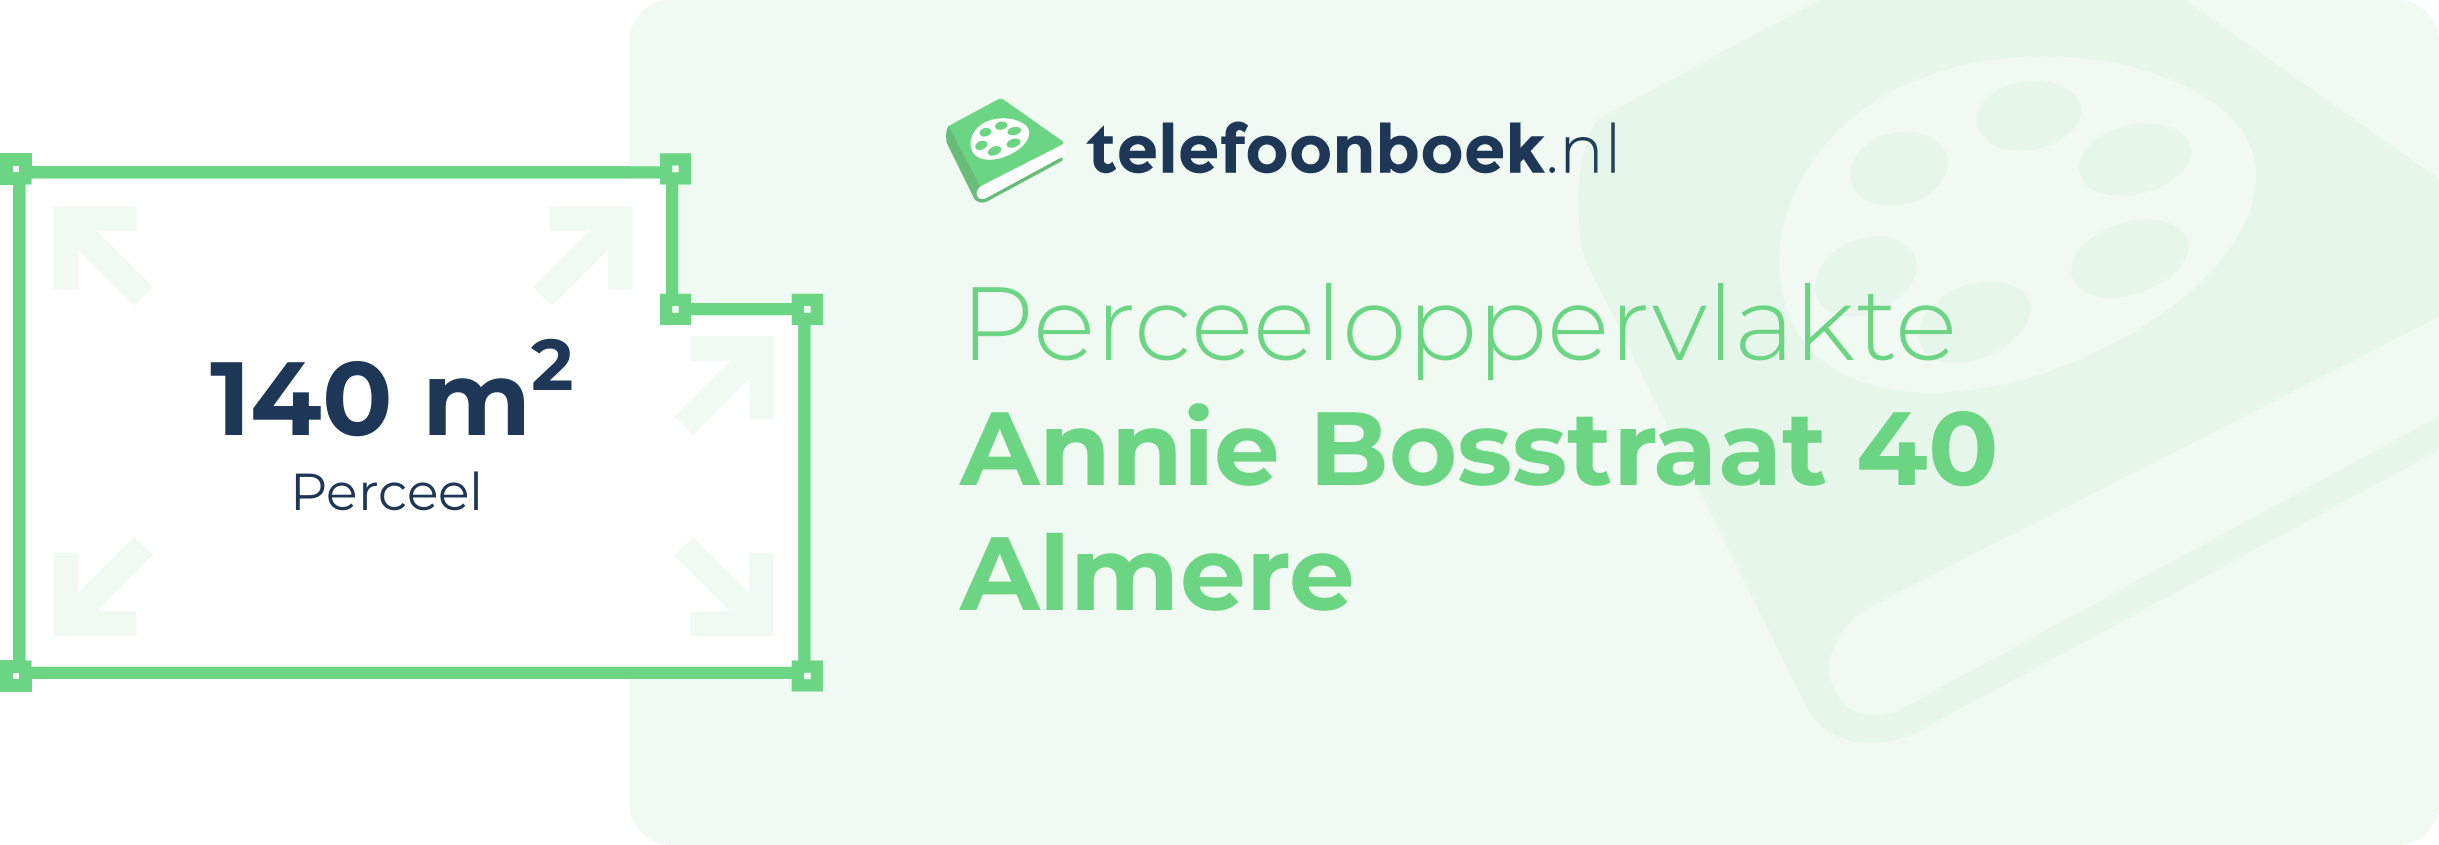 Perceeloppervlakte Annie Bosstraat 40 Almere